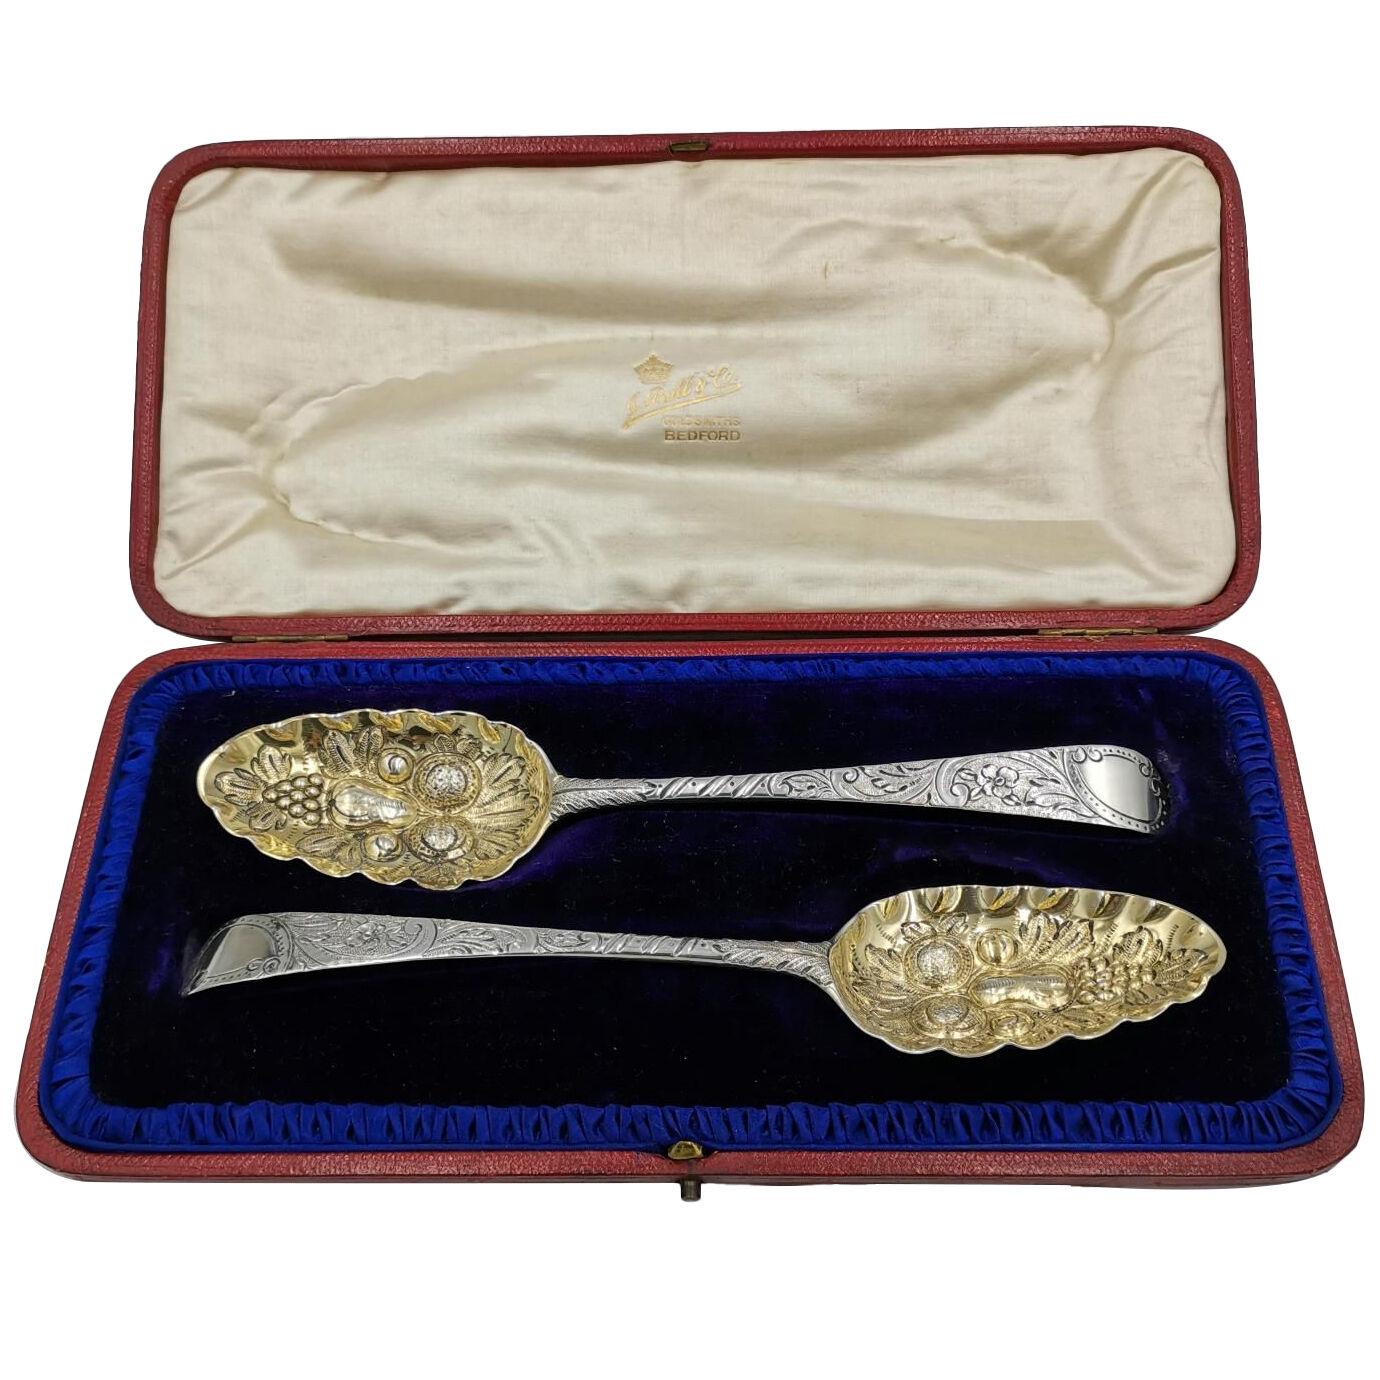 18th century berry spoons